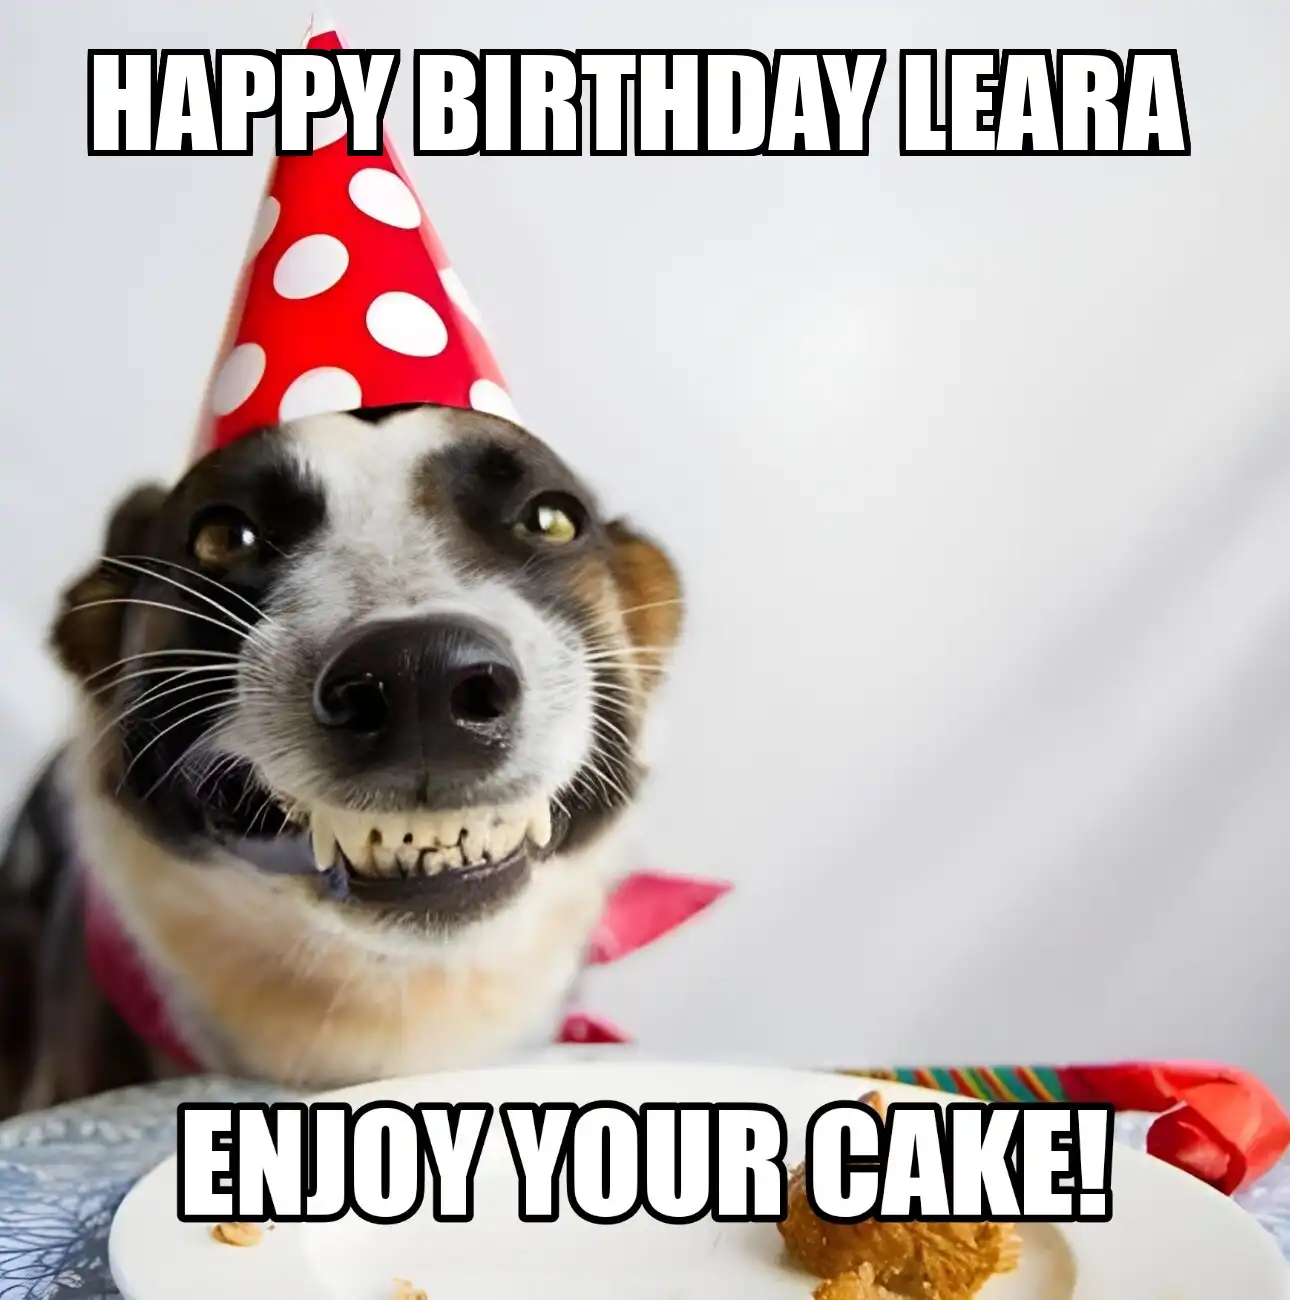 Happy Birthday Leara Enjoy Your Cake Dog Meme